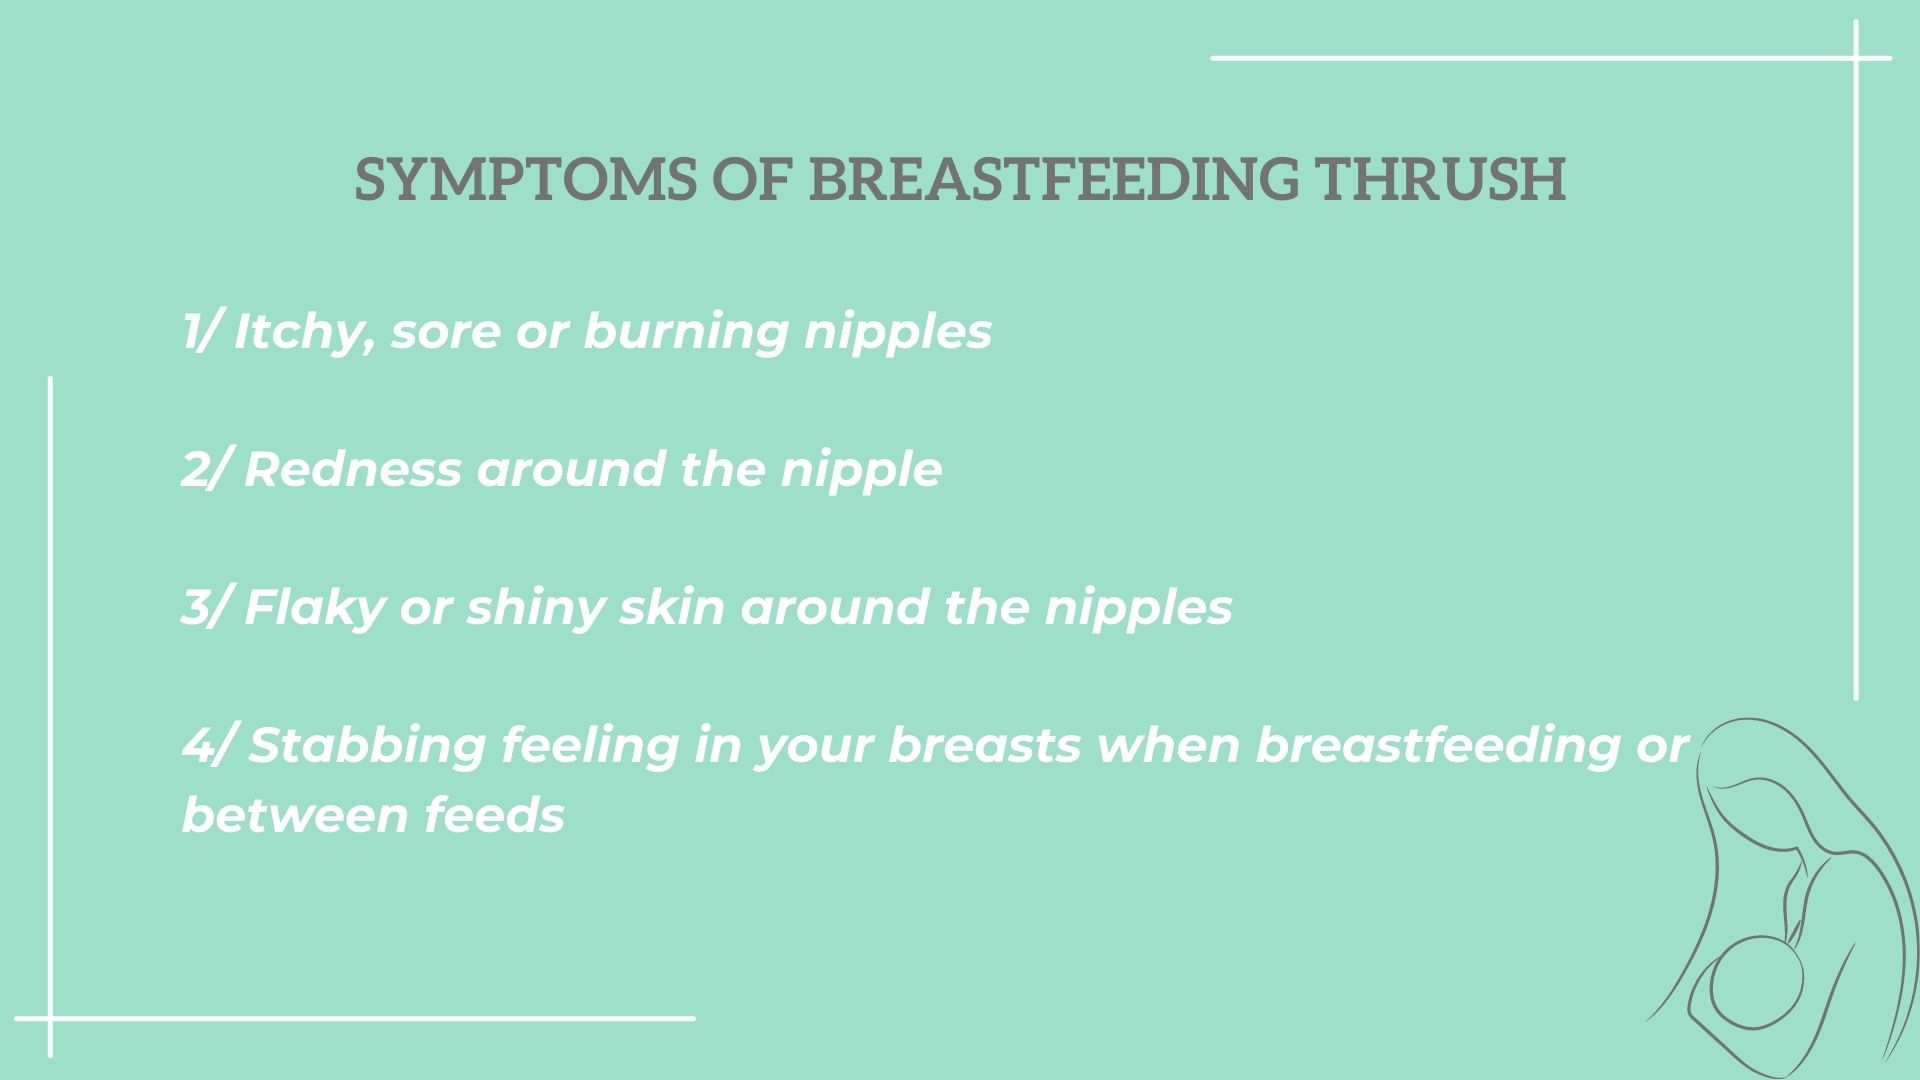 infographic on breastfeeding thrush symptoms